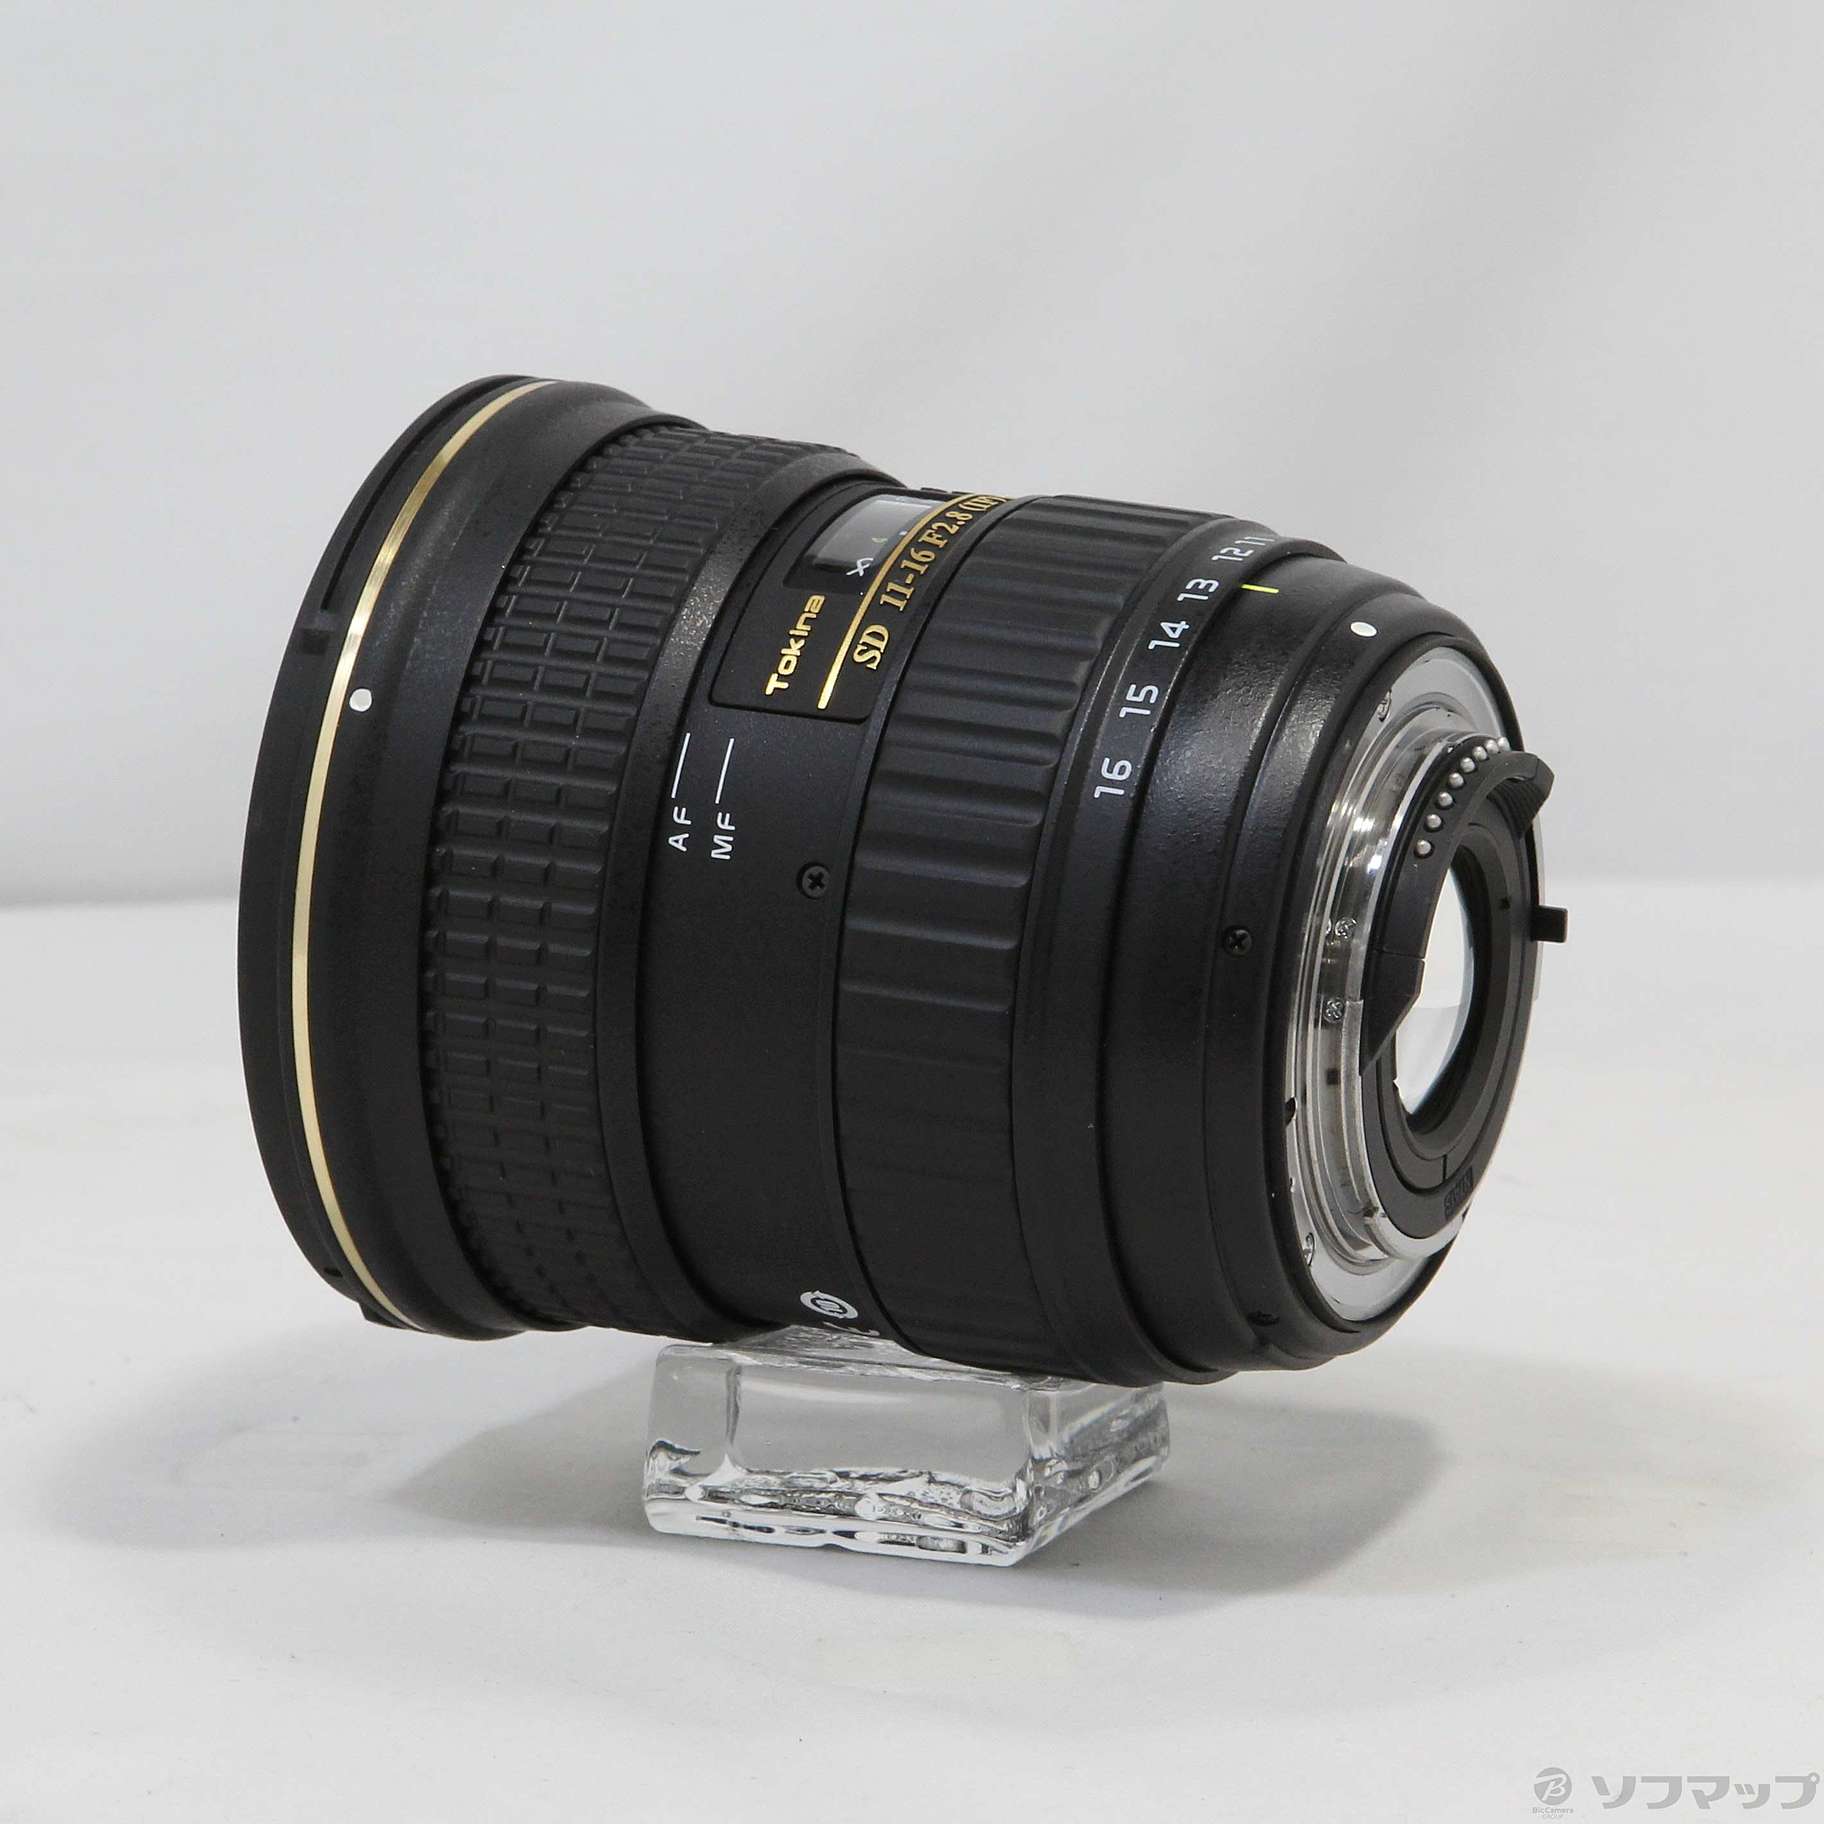 AF 11-16mm F2.8 (AT-X116 PRO DX II) (Nikon用) (レンズ)